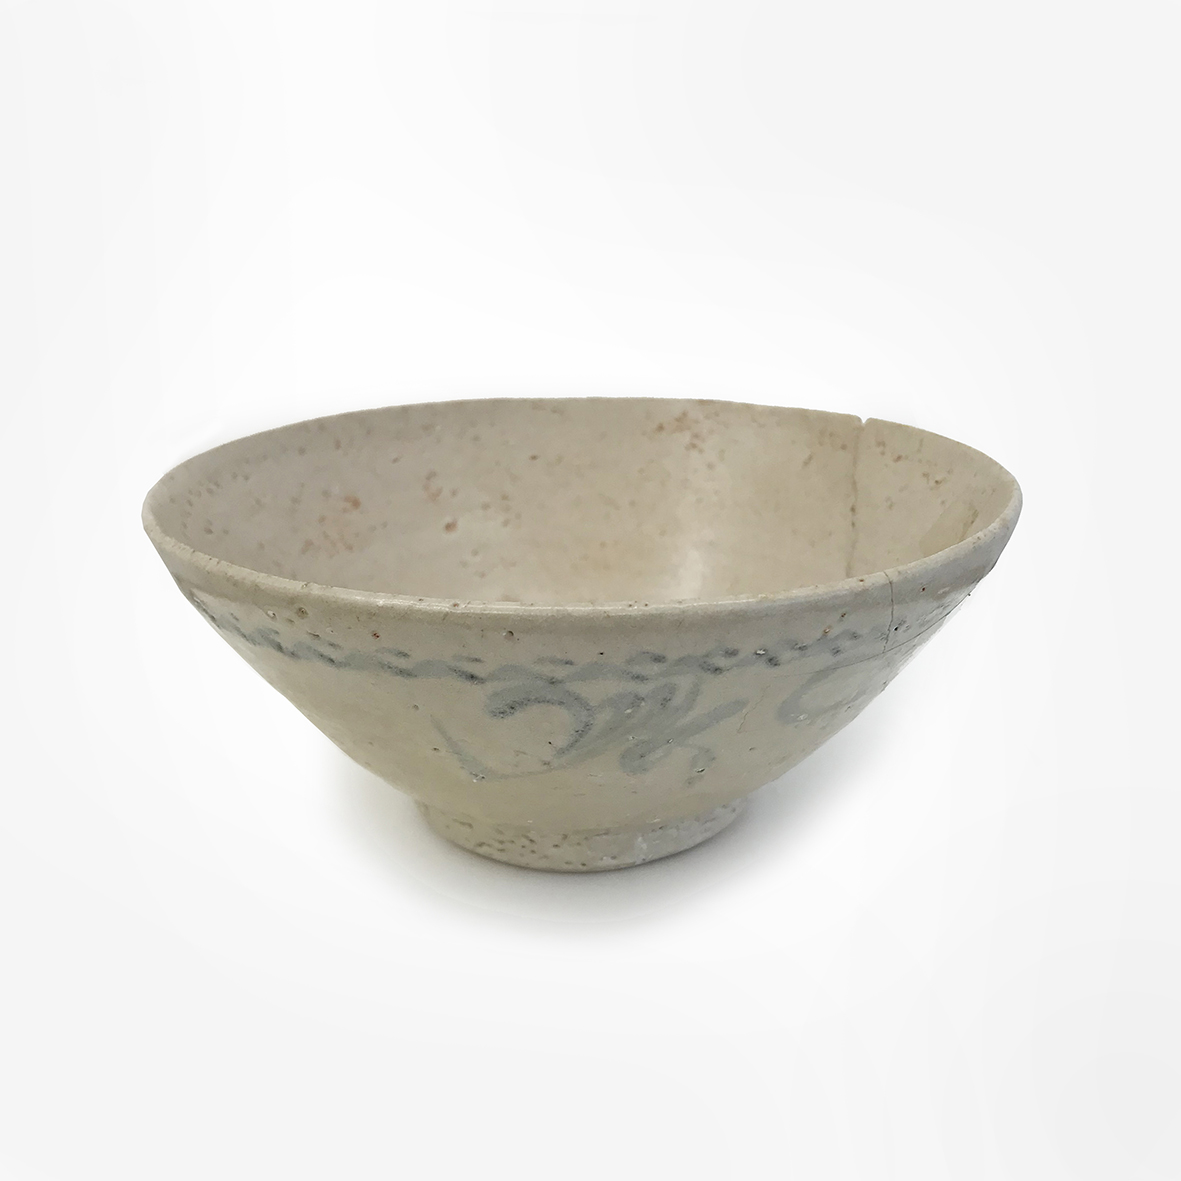 bowl_japan_ 18th_Korea / Japan_basedonart gallery